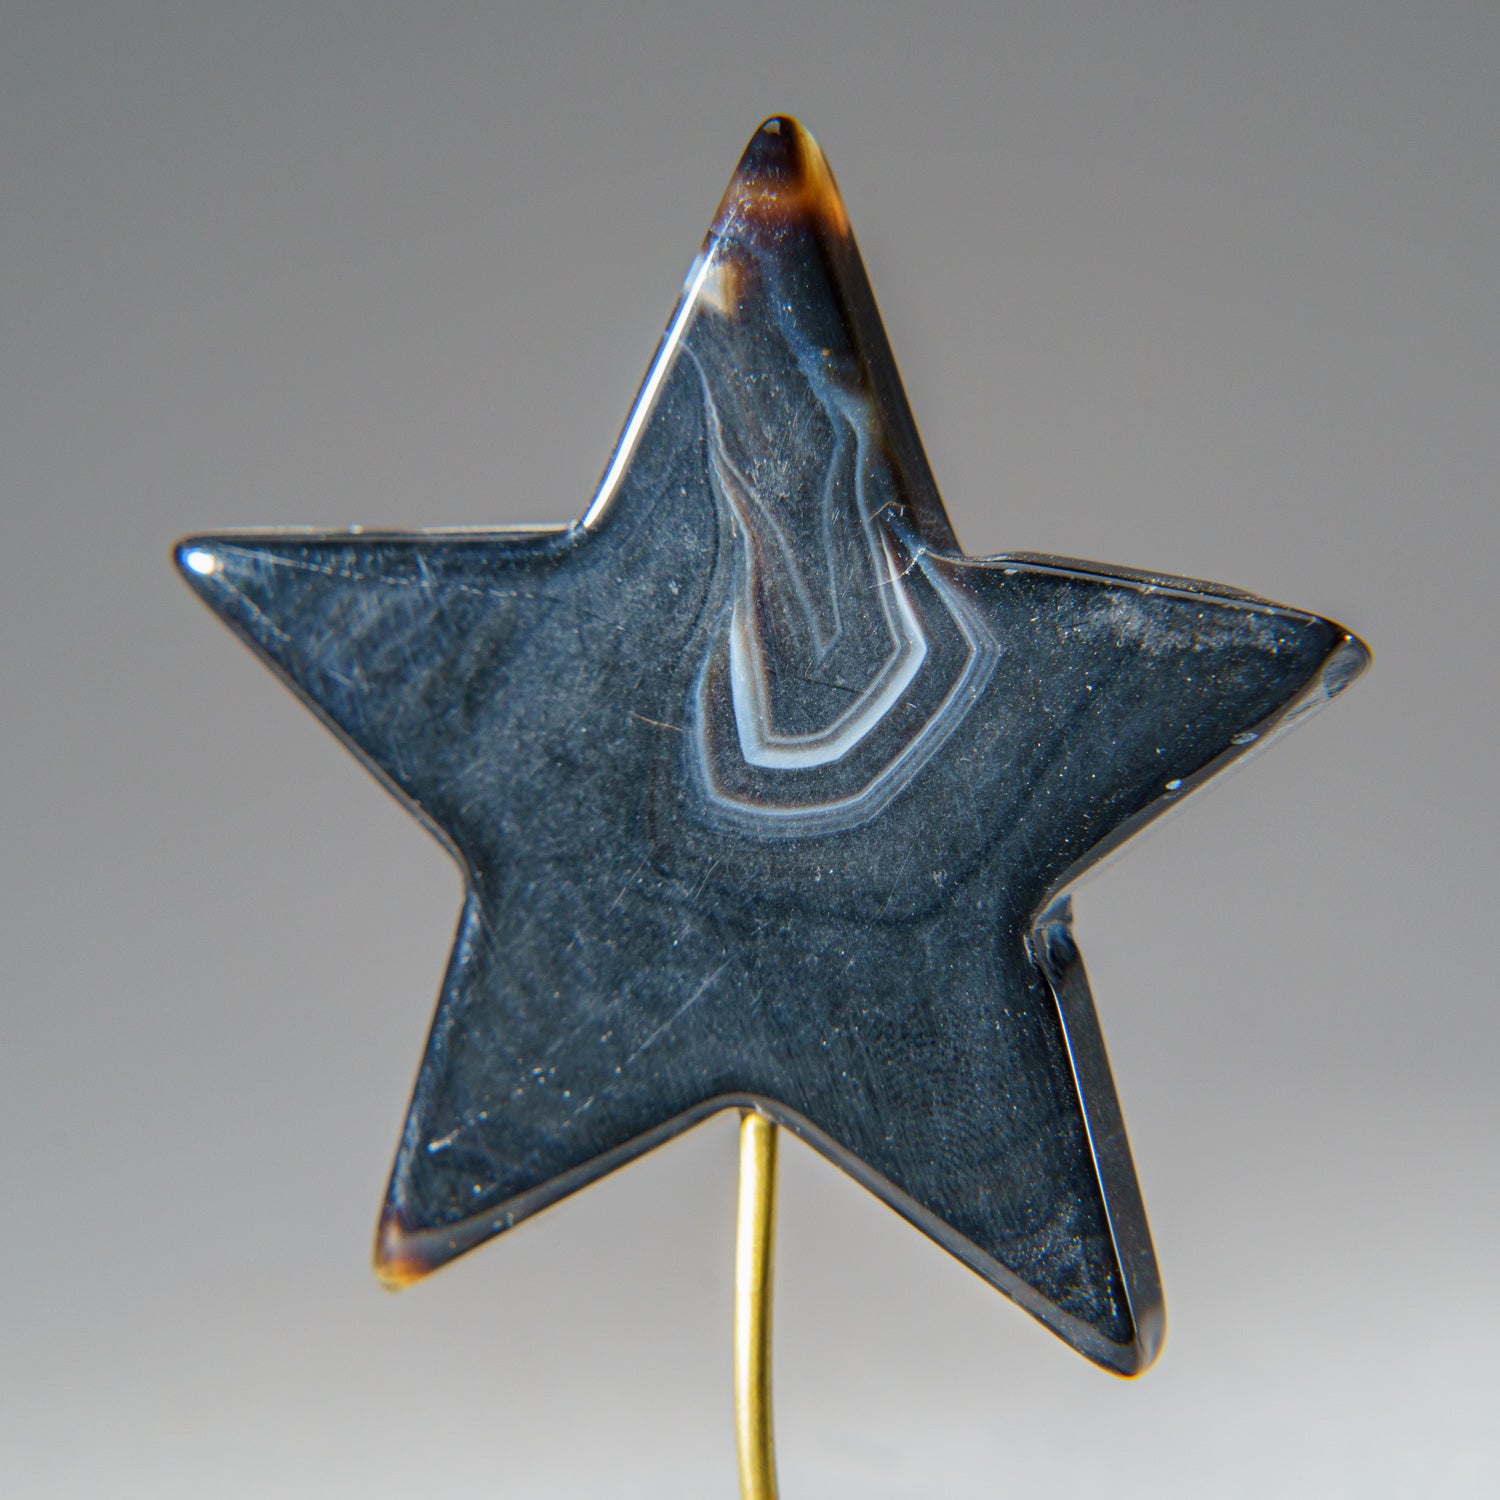 Polished Agate Star on Custom Metal Stand (38.2 grams)